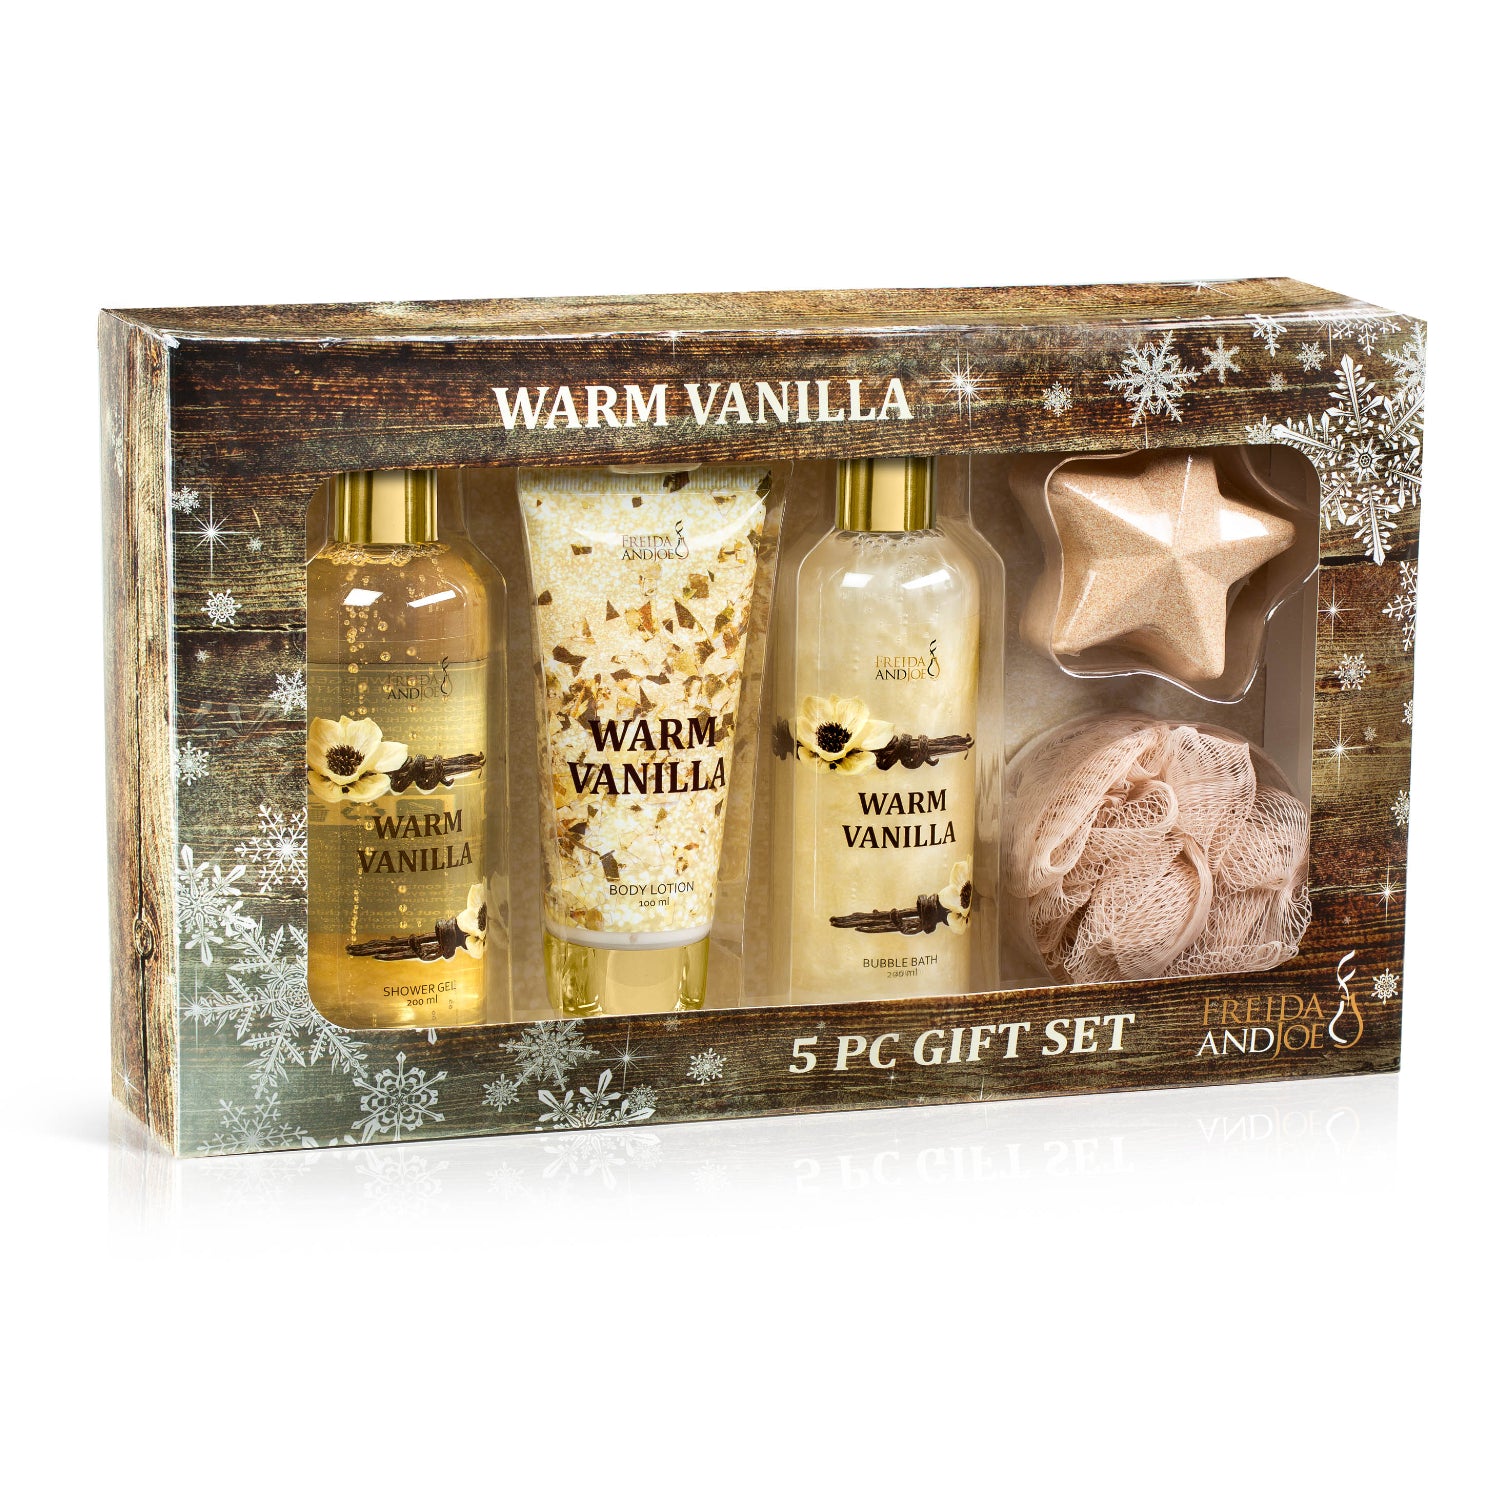 Coconut & Warm Vanilla Bath & Shower Gel